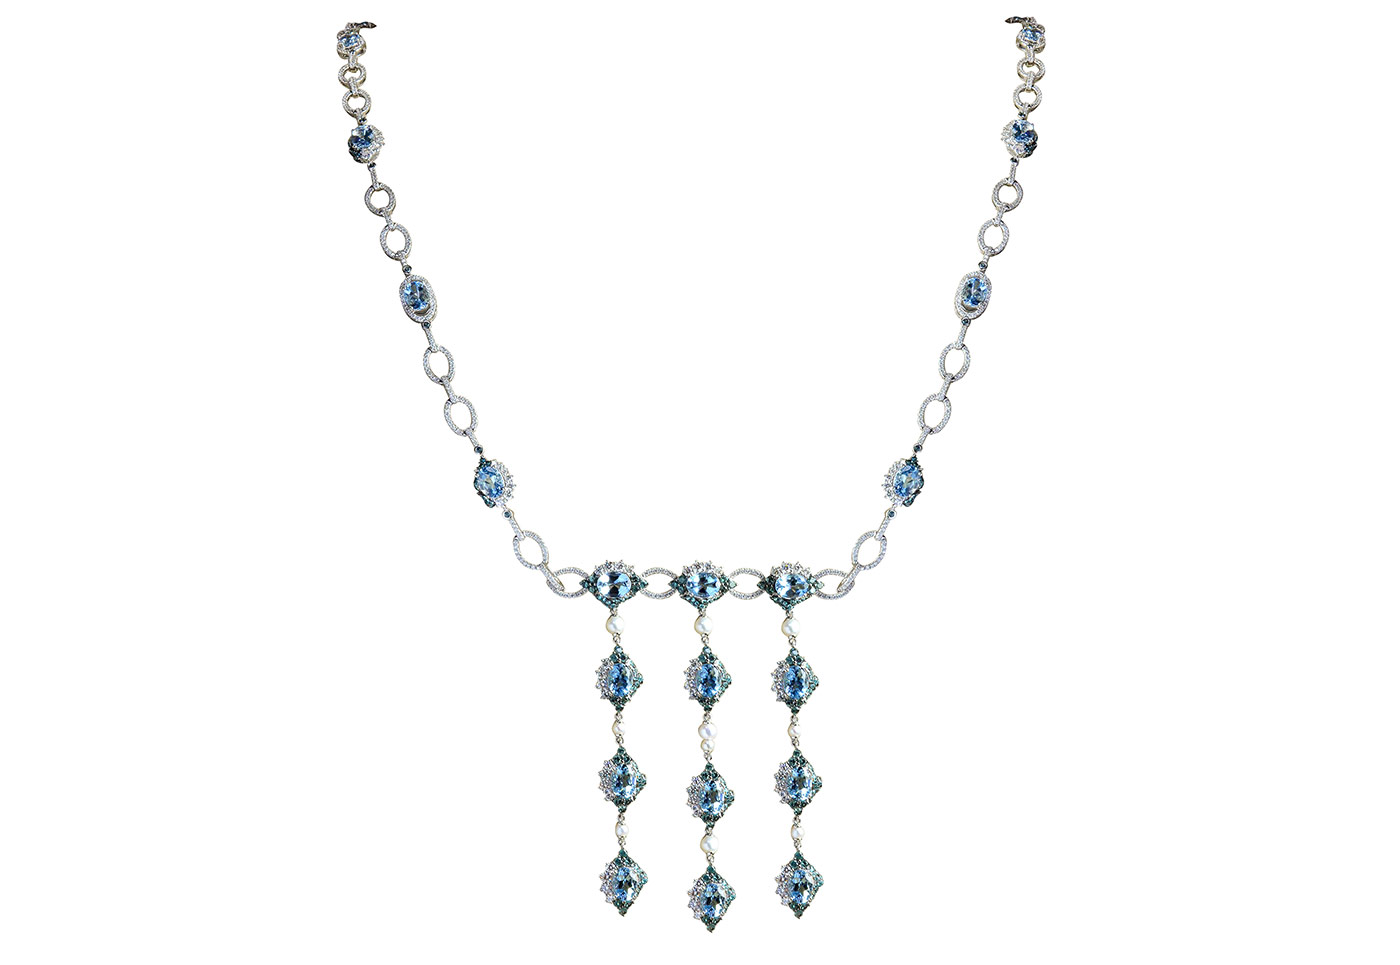 Sunita Nahata ‘Blue Planet’ necklace with Santa Maria aquamarines, Alexandrites, pearls and diamonds in white gold